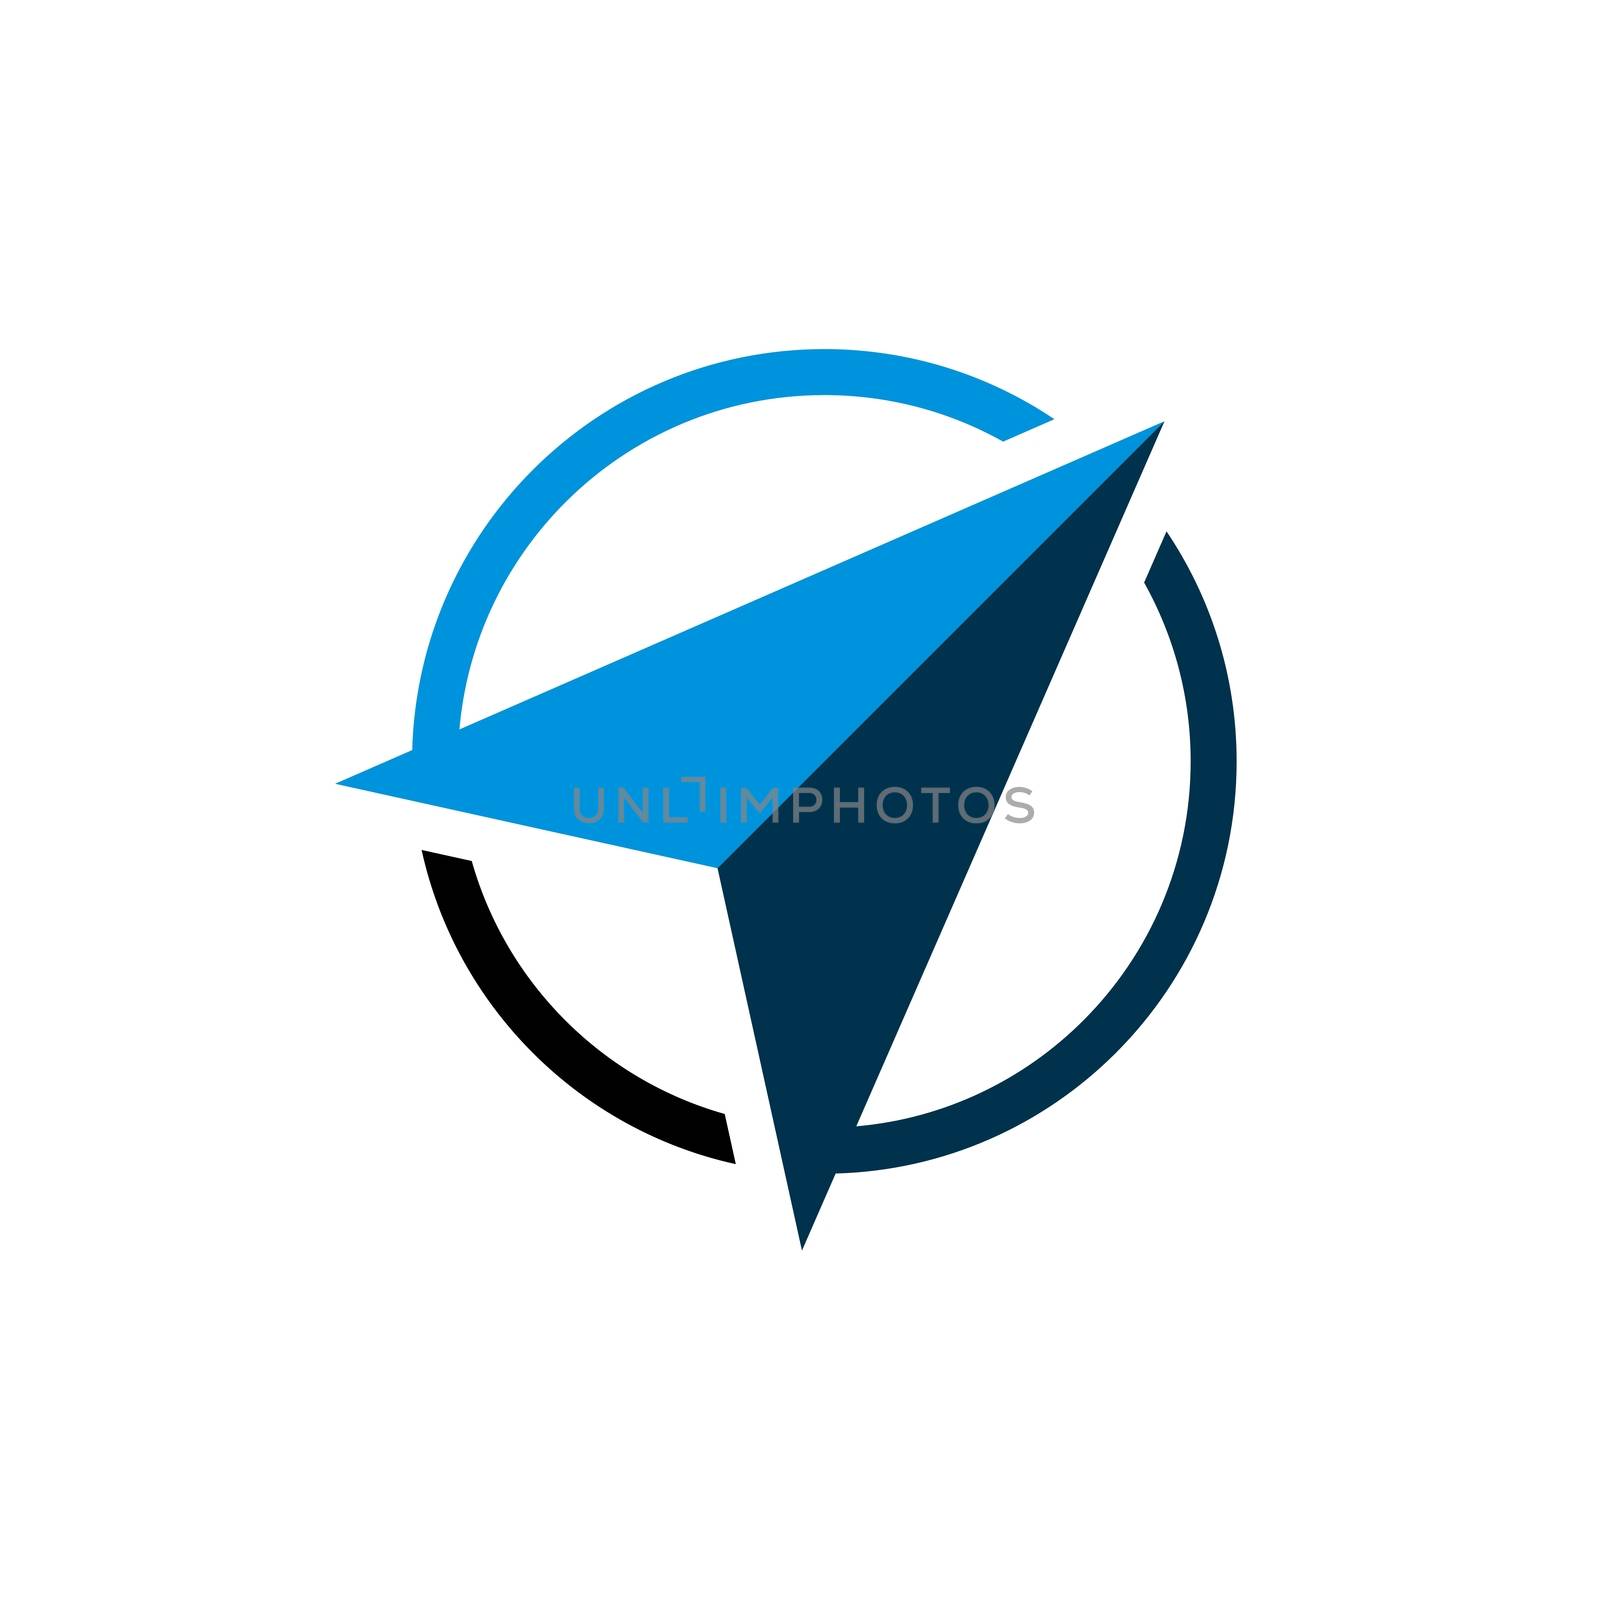 Blue Arrow Navigate Compass Logo Template Illustration Design. Vector EPS 10.